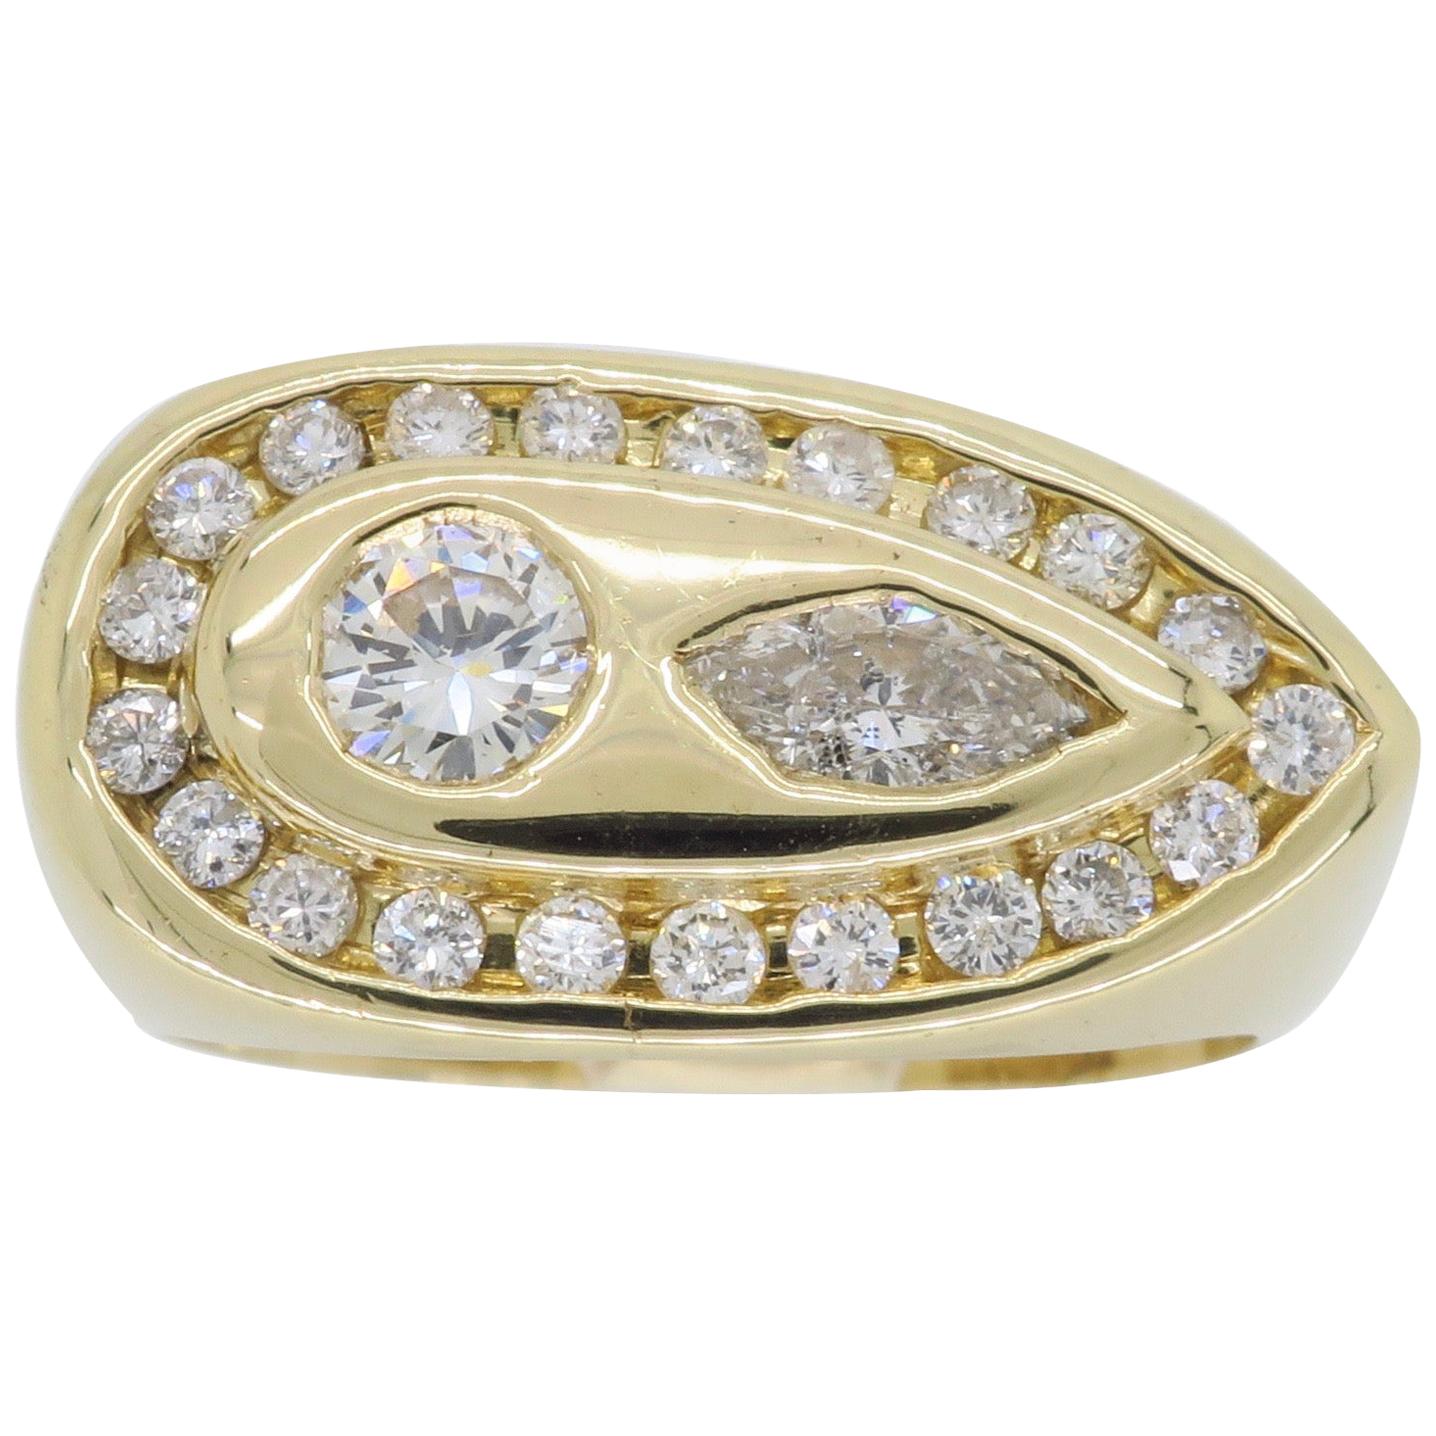 Modern 1.28 Carat Diamond Ring with Marquise and Round Diamonds